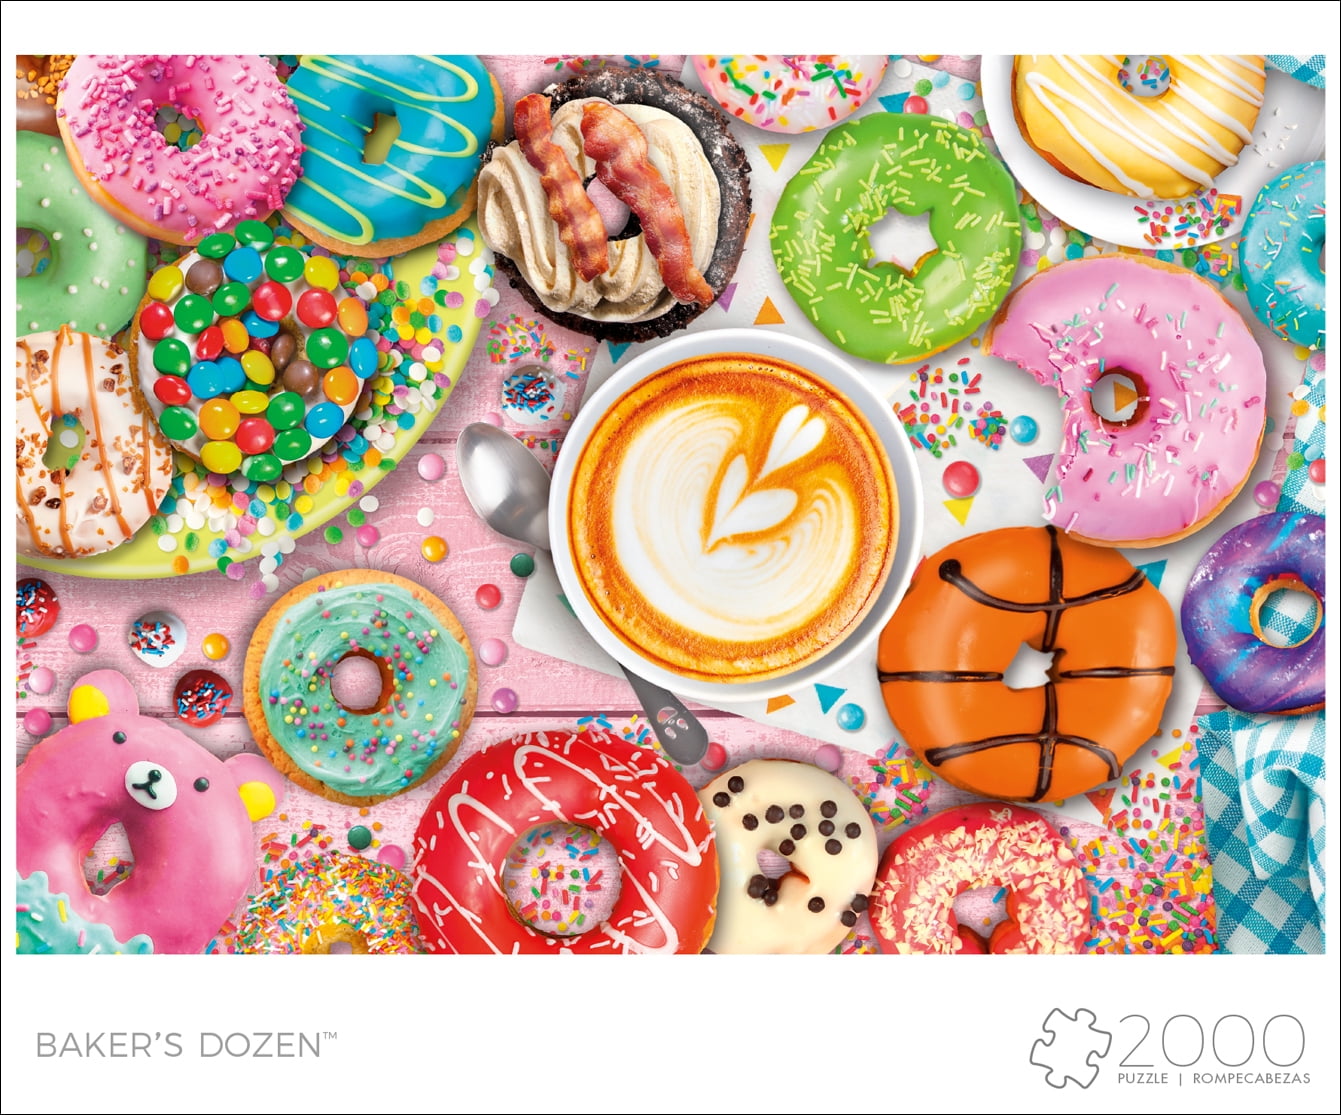 Baker's Dozen Donuts Puzzle 2000 Pieces Buffalo Games 38.5" x 26.5" BRAND NEW 